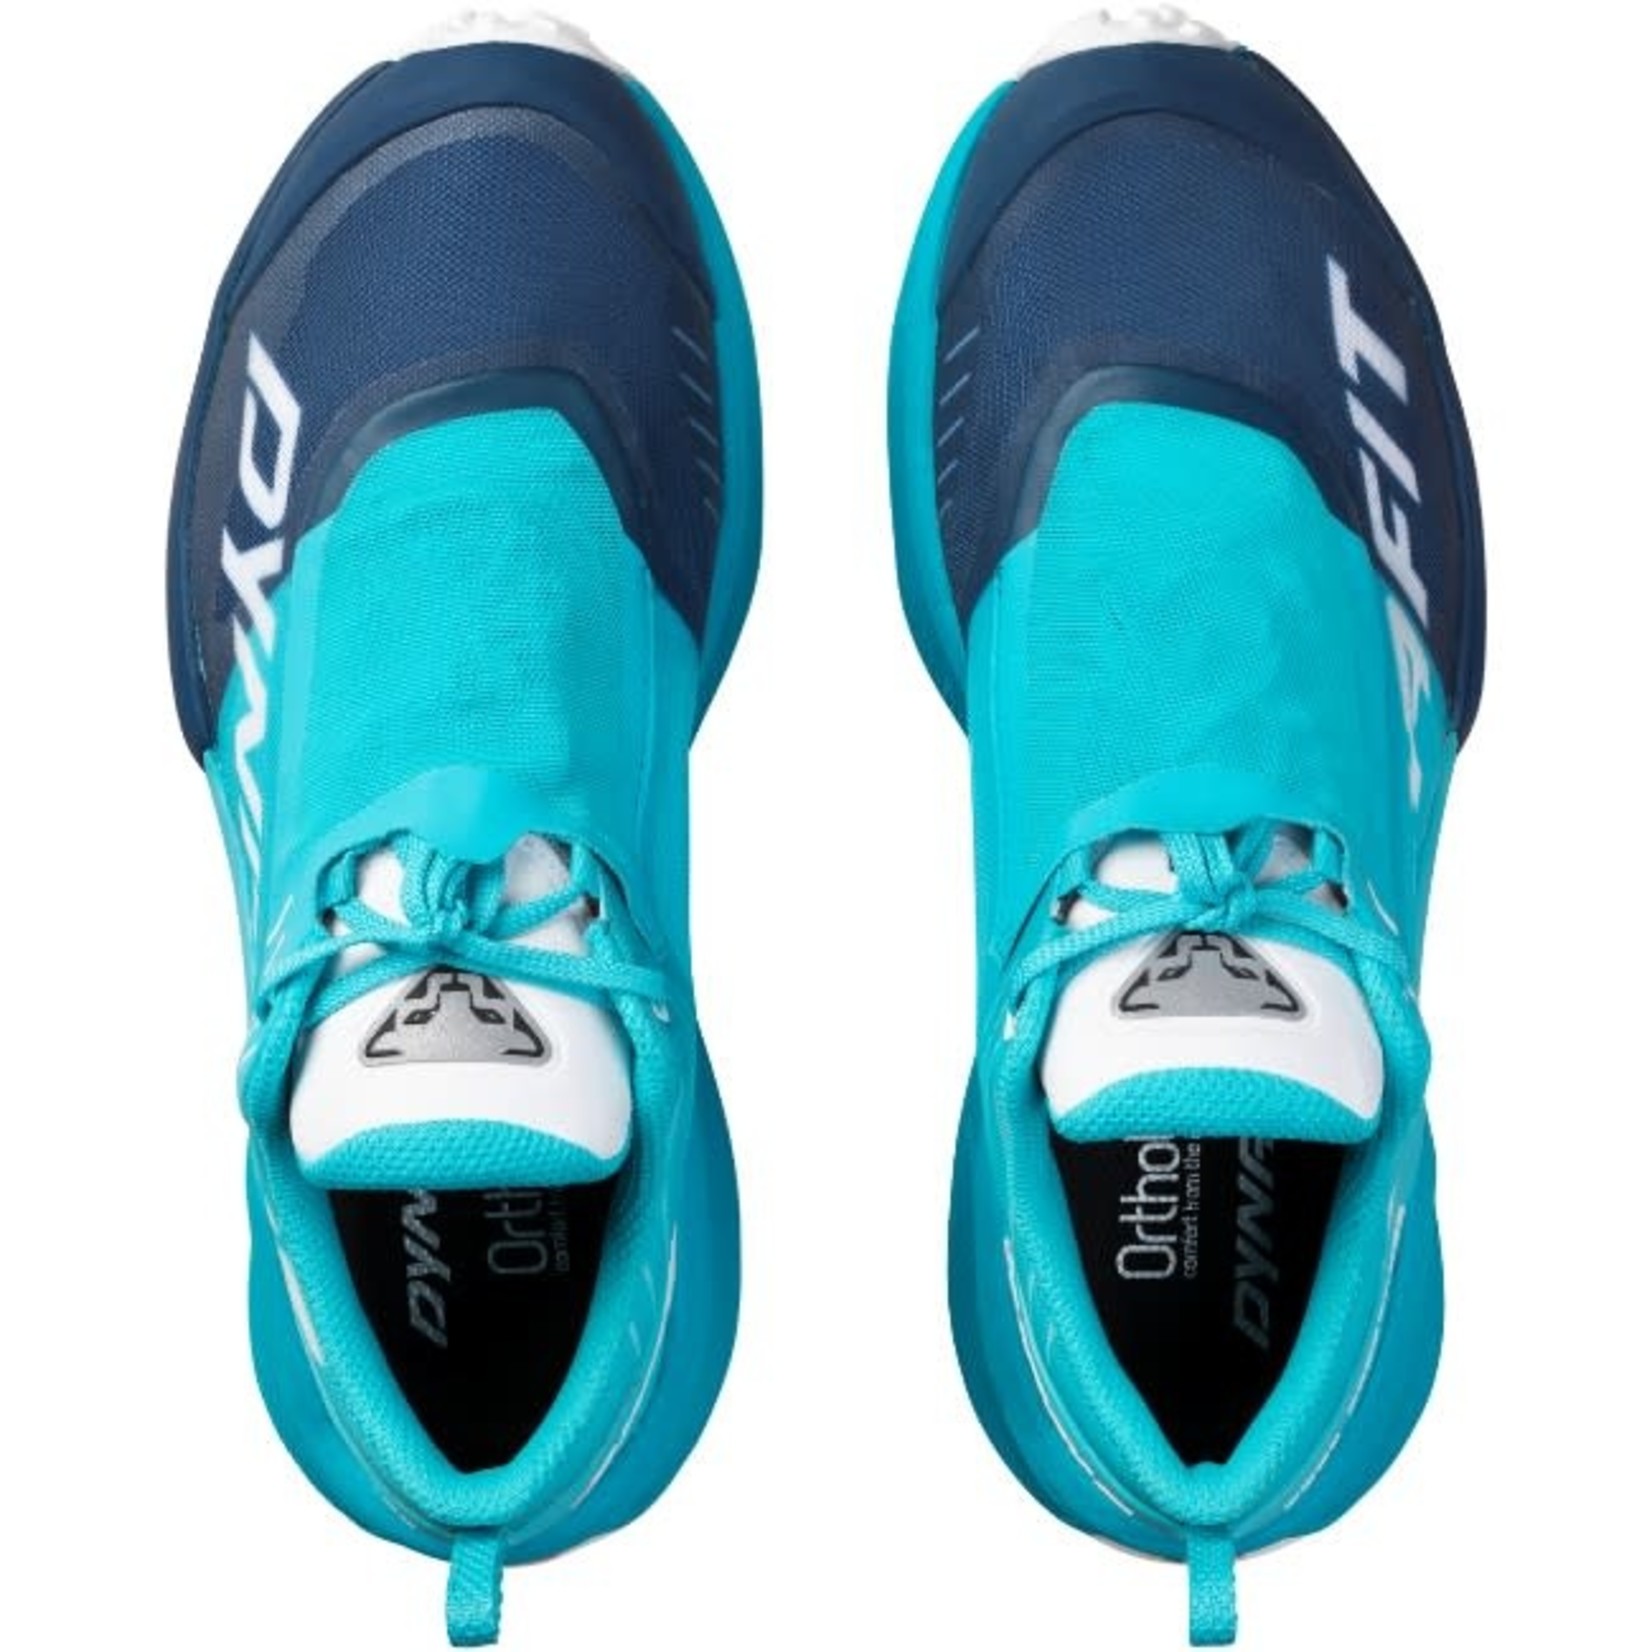 Dynafit Women's Ultra 100 Trail Running Shoes